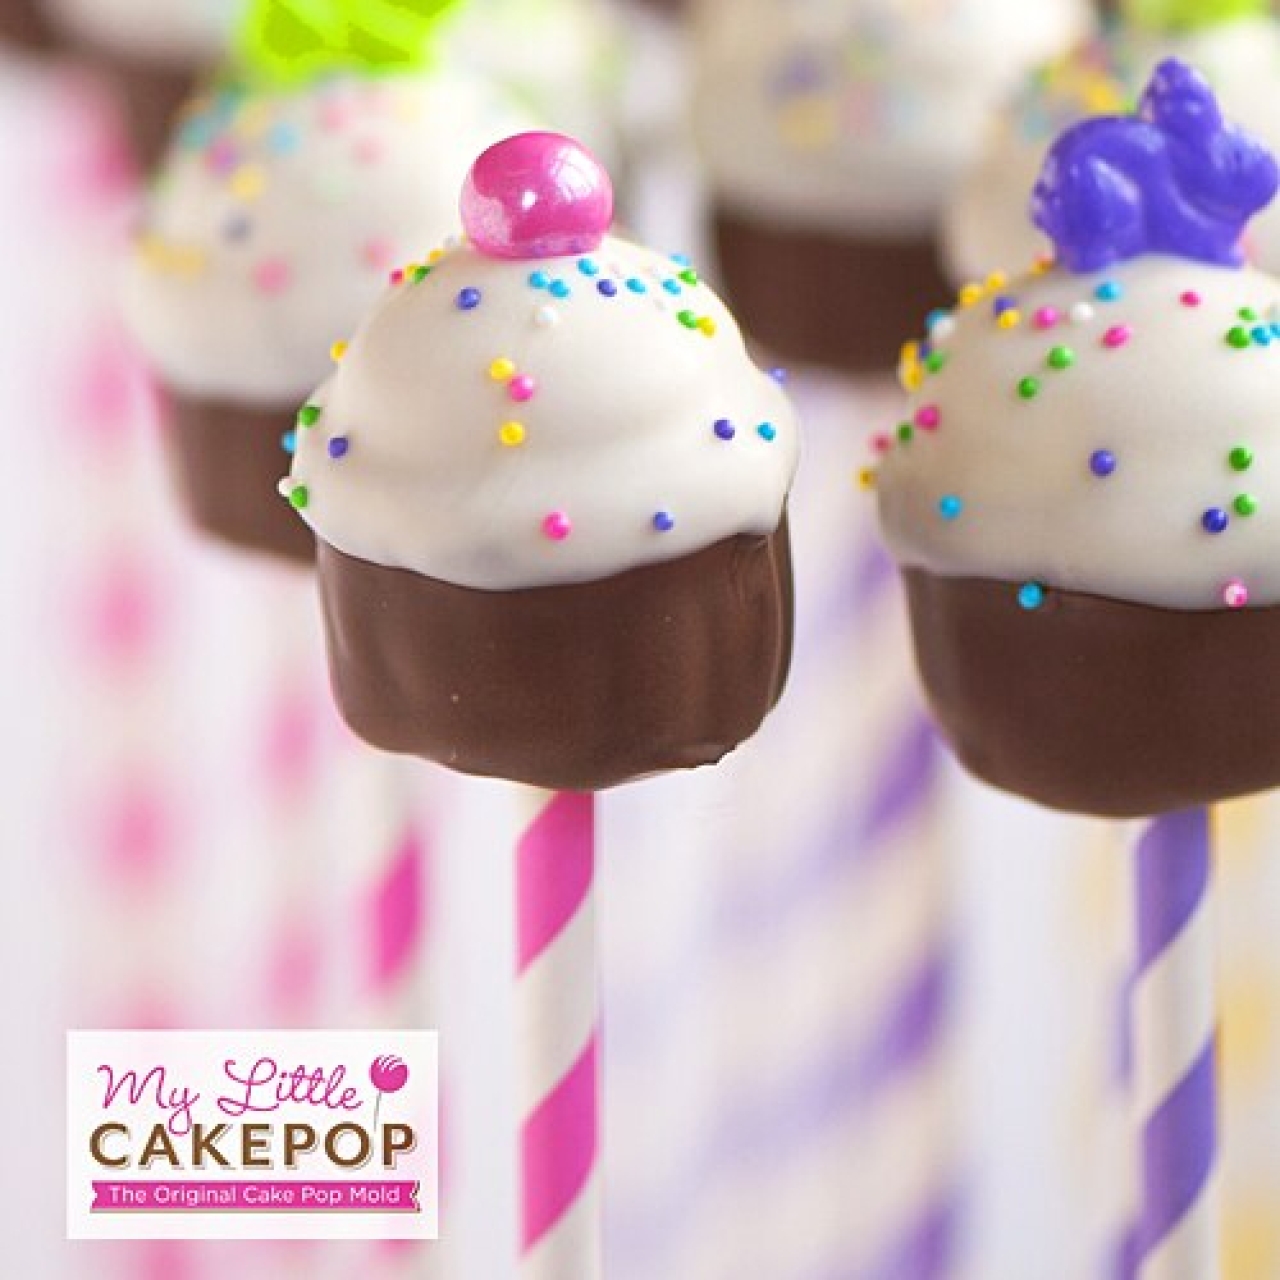 Cake Pop Form "Cupcake"